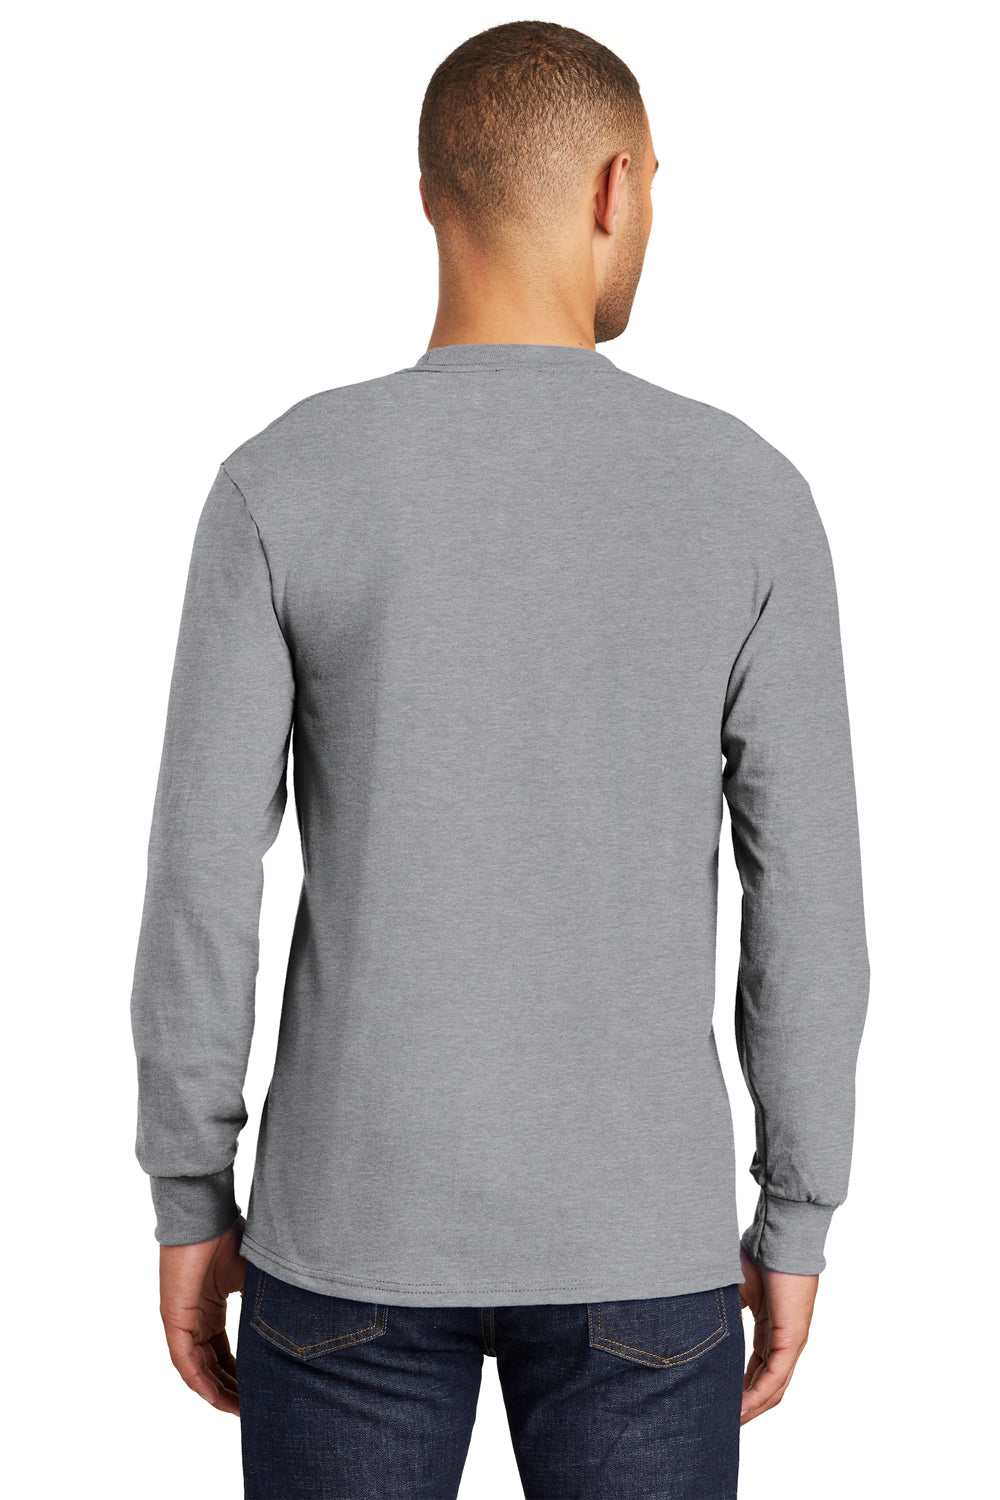 Port & Company PC61LSP Mens Essential Long Sleeve Crewneck T-Shirt w/ Pocket Heather Grey Back